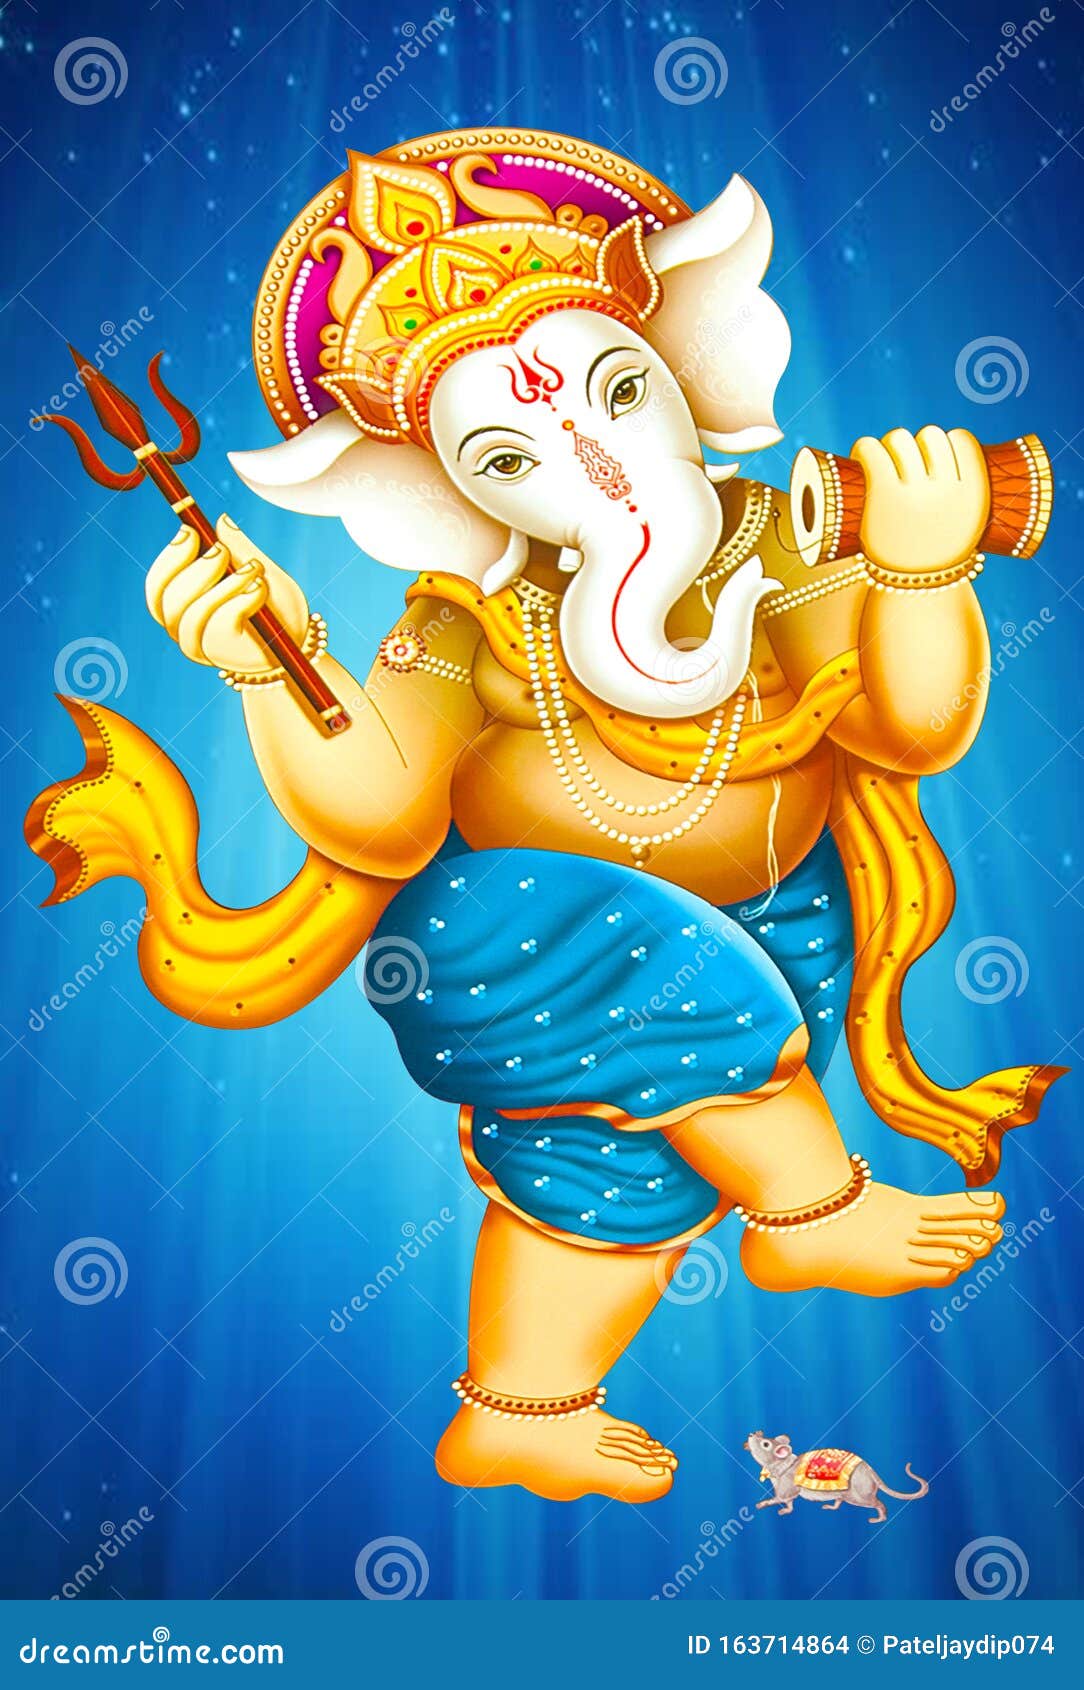 Hindu Lord Ganesha Texture Wallpaper Background Stock Photo - Image of  beautiful, elevation: 163714864